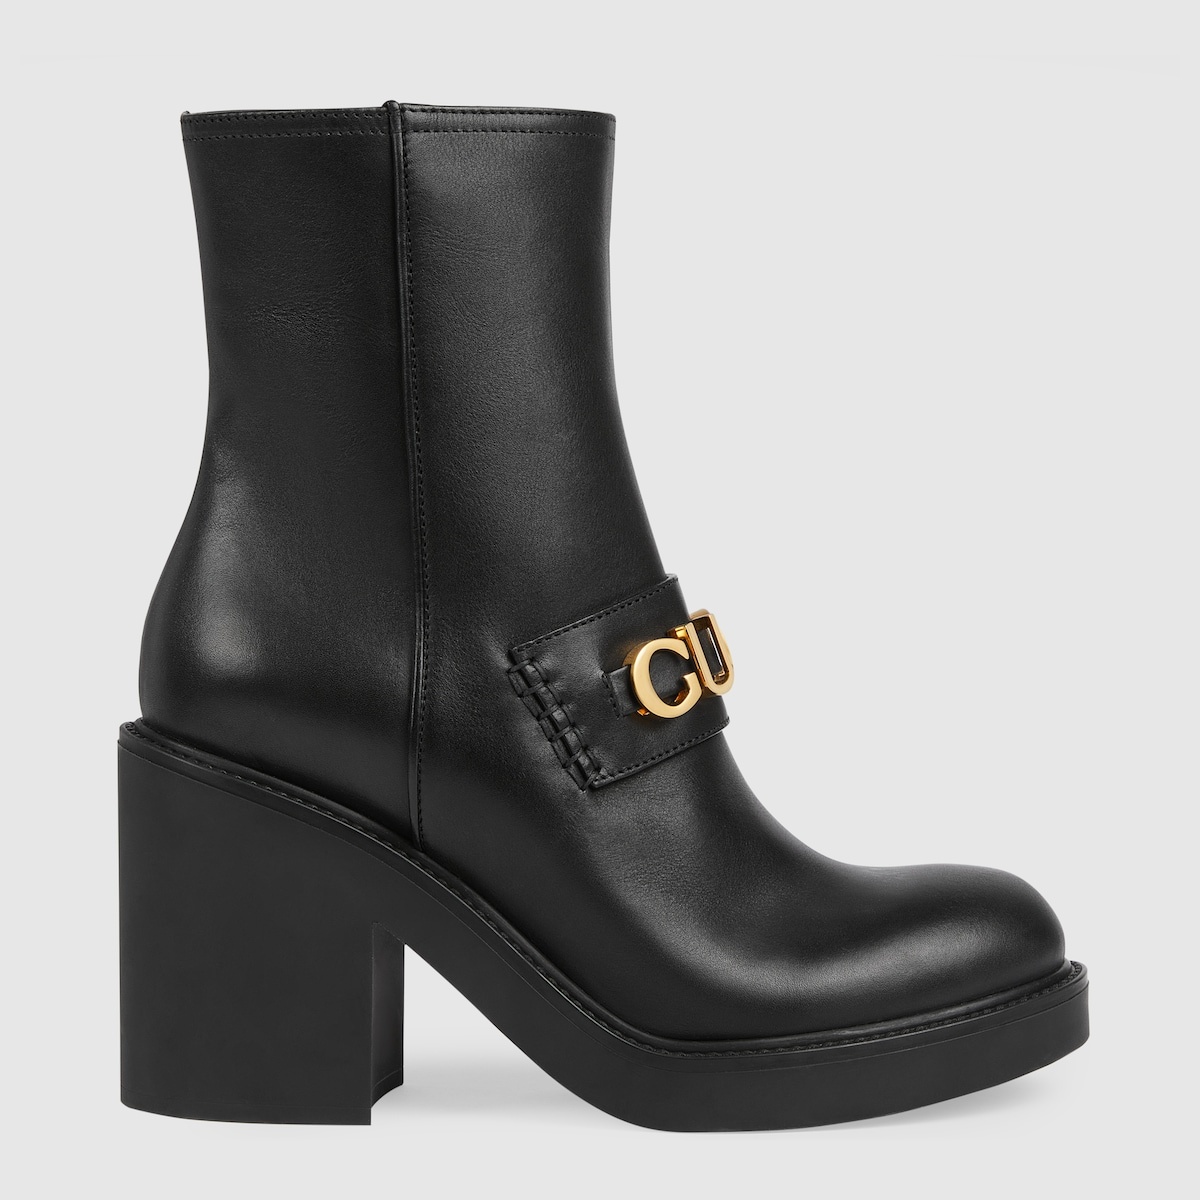 Women's Gucci boot - 1